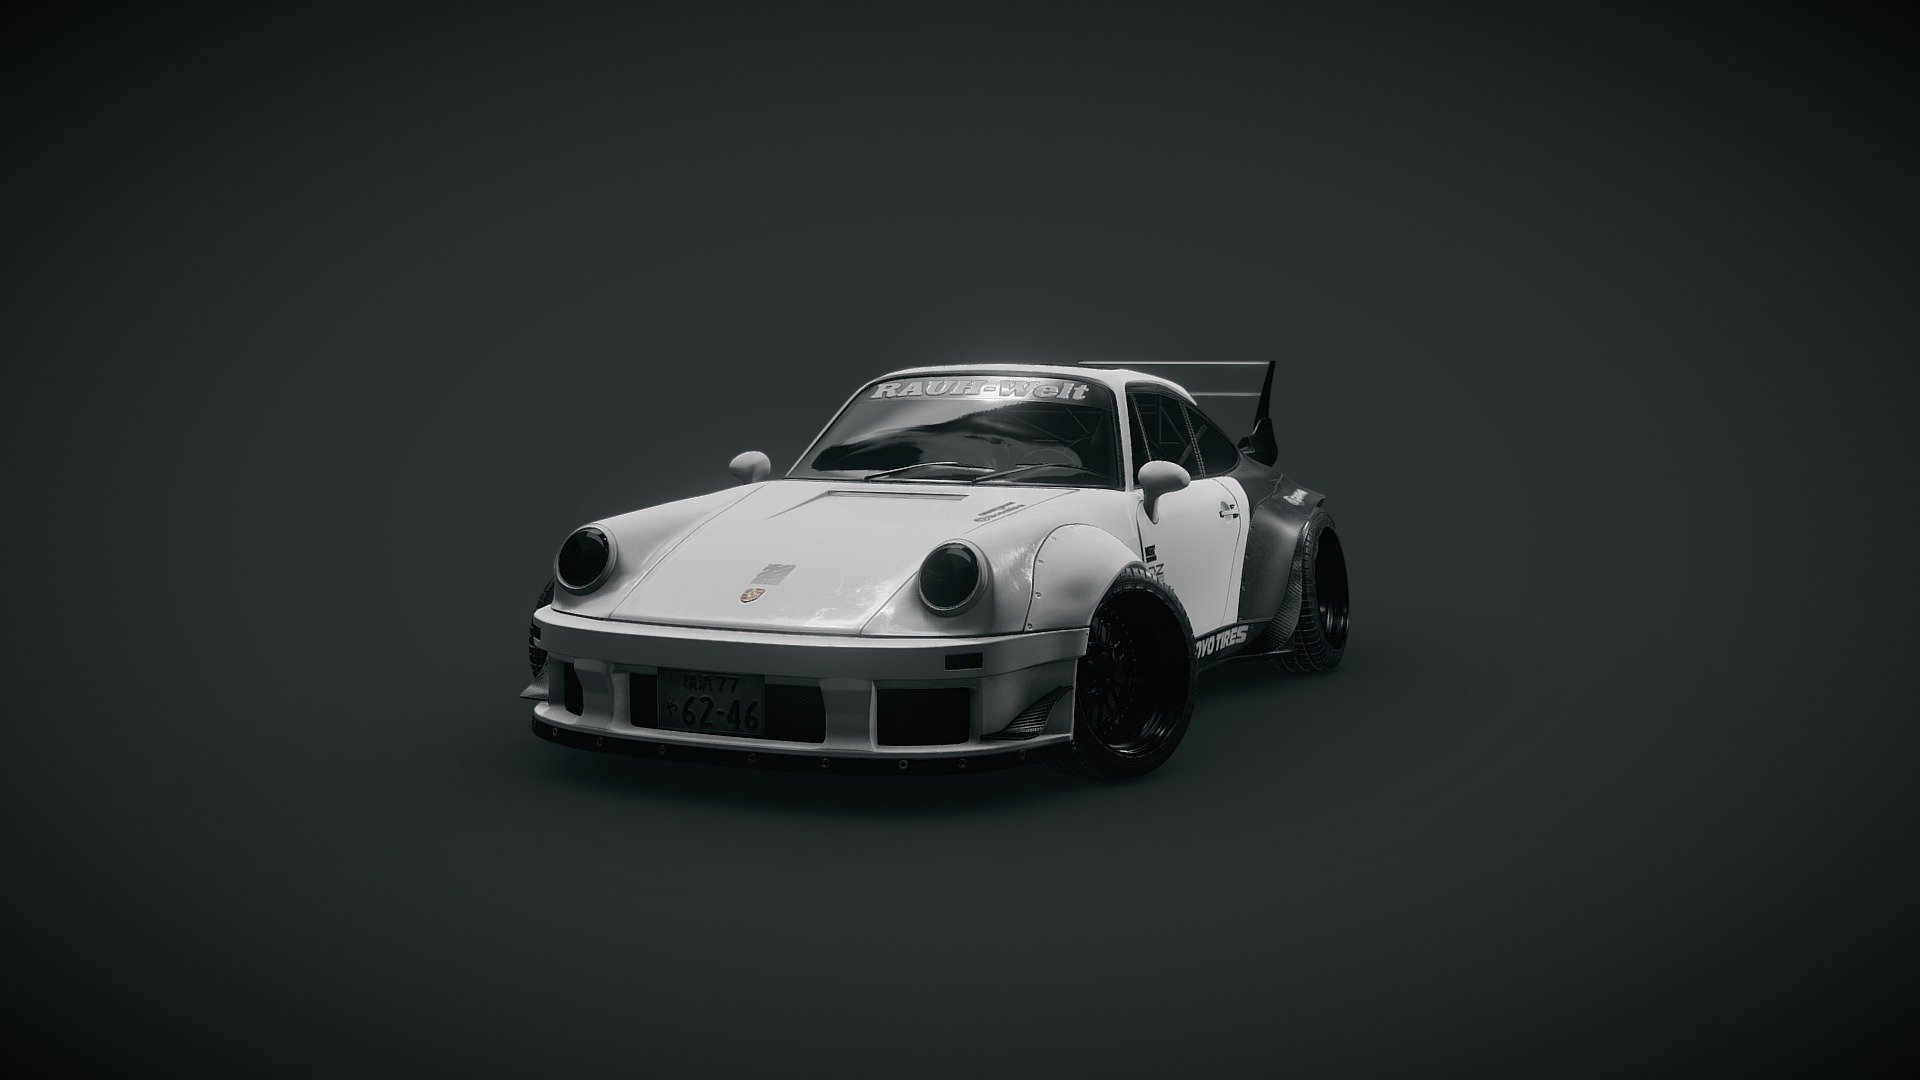 Porsche turbo